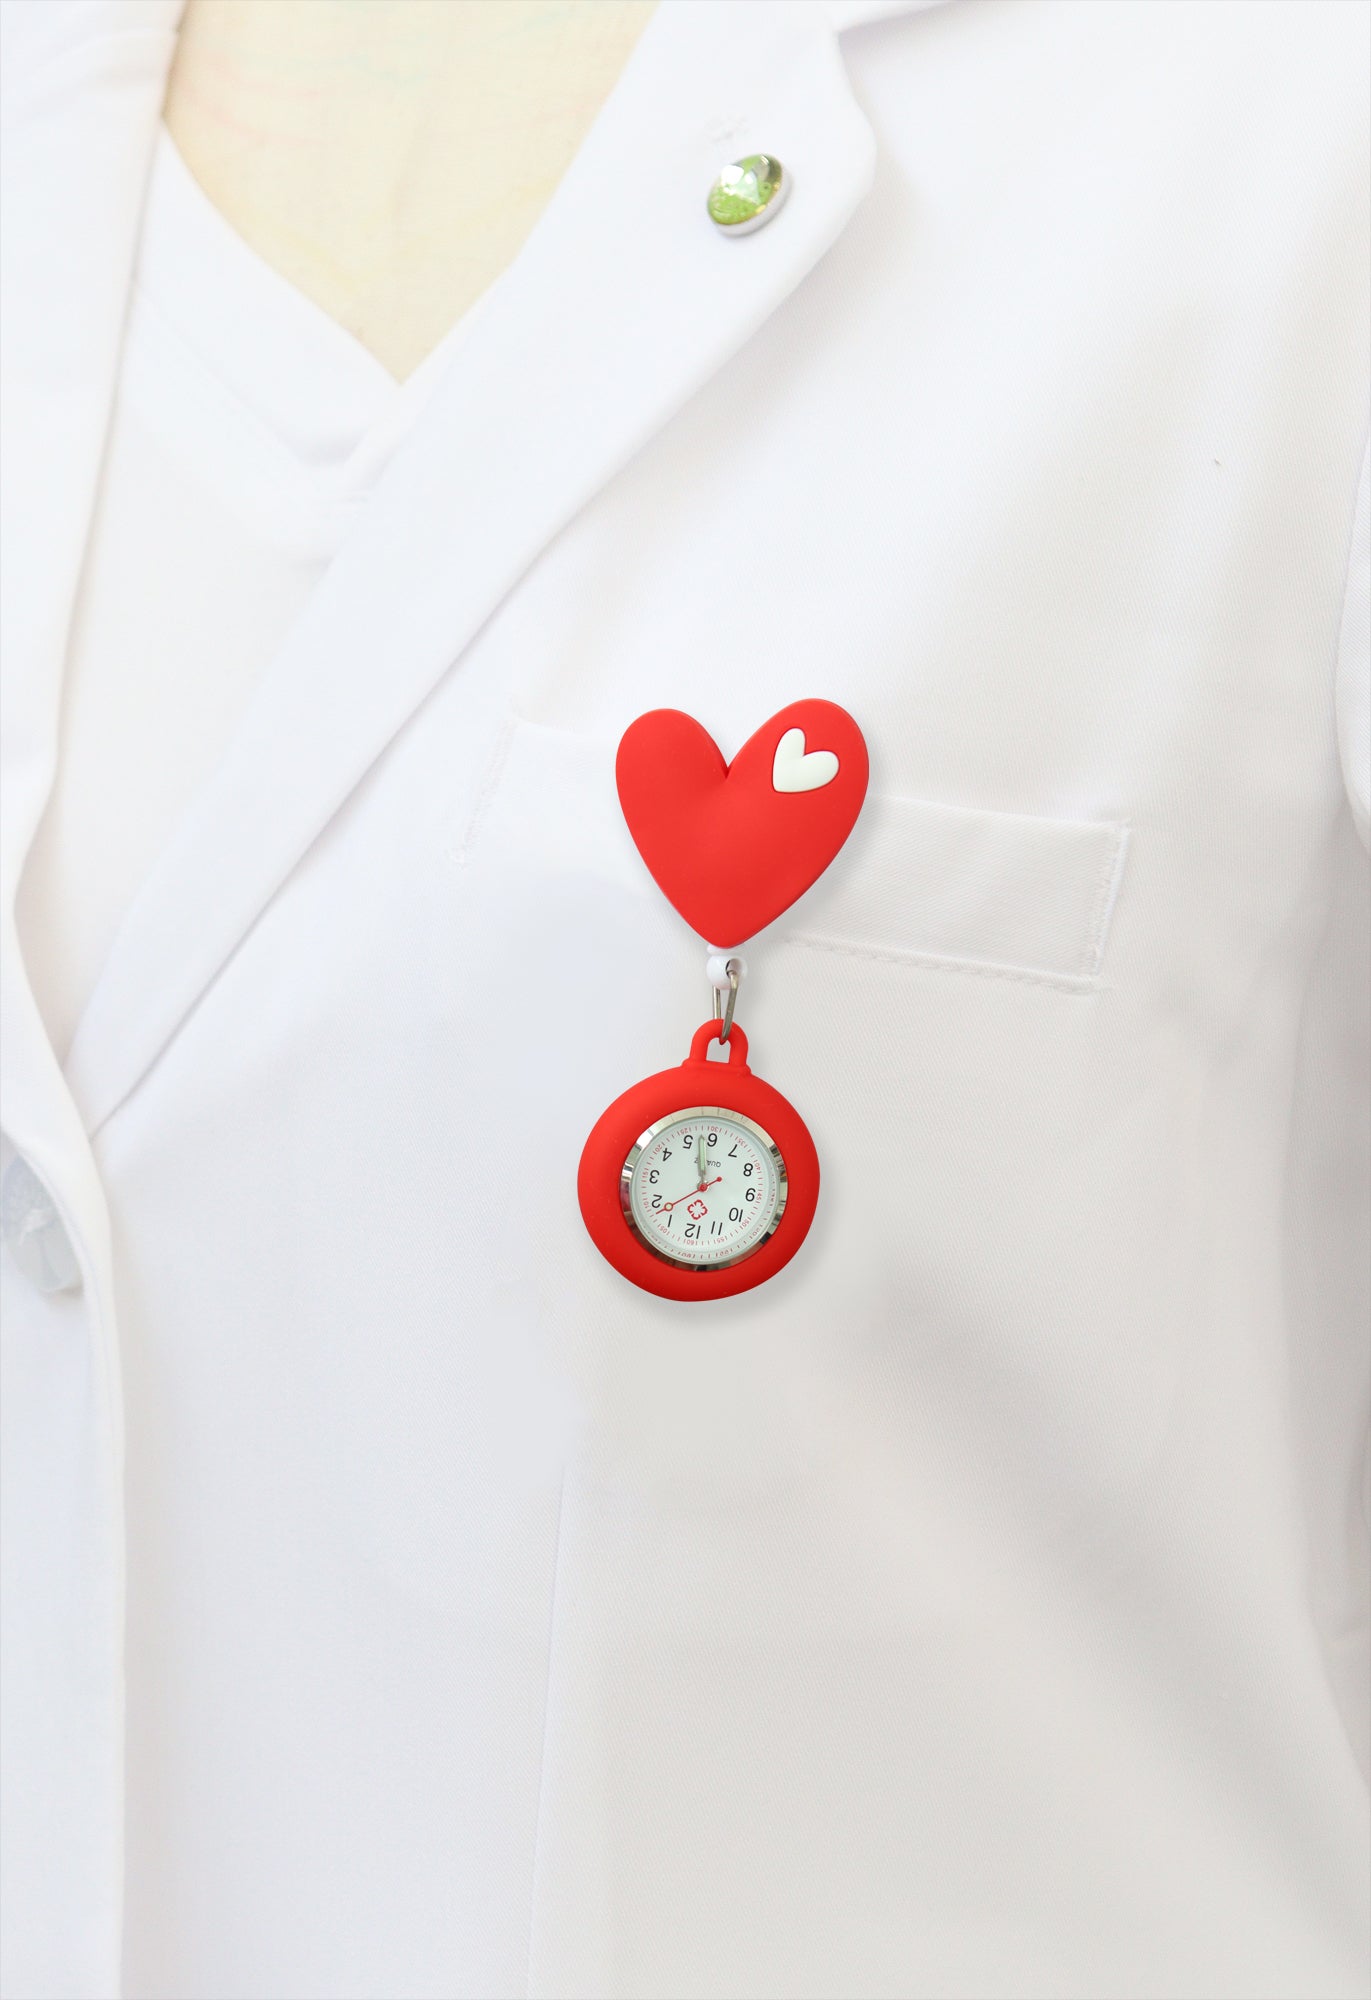 Nurse Pocket Silicon Fob Clip Watch - Red Heart